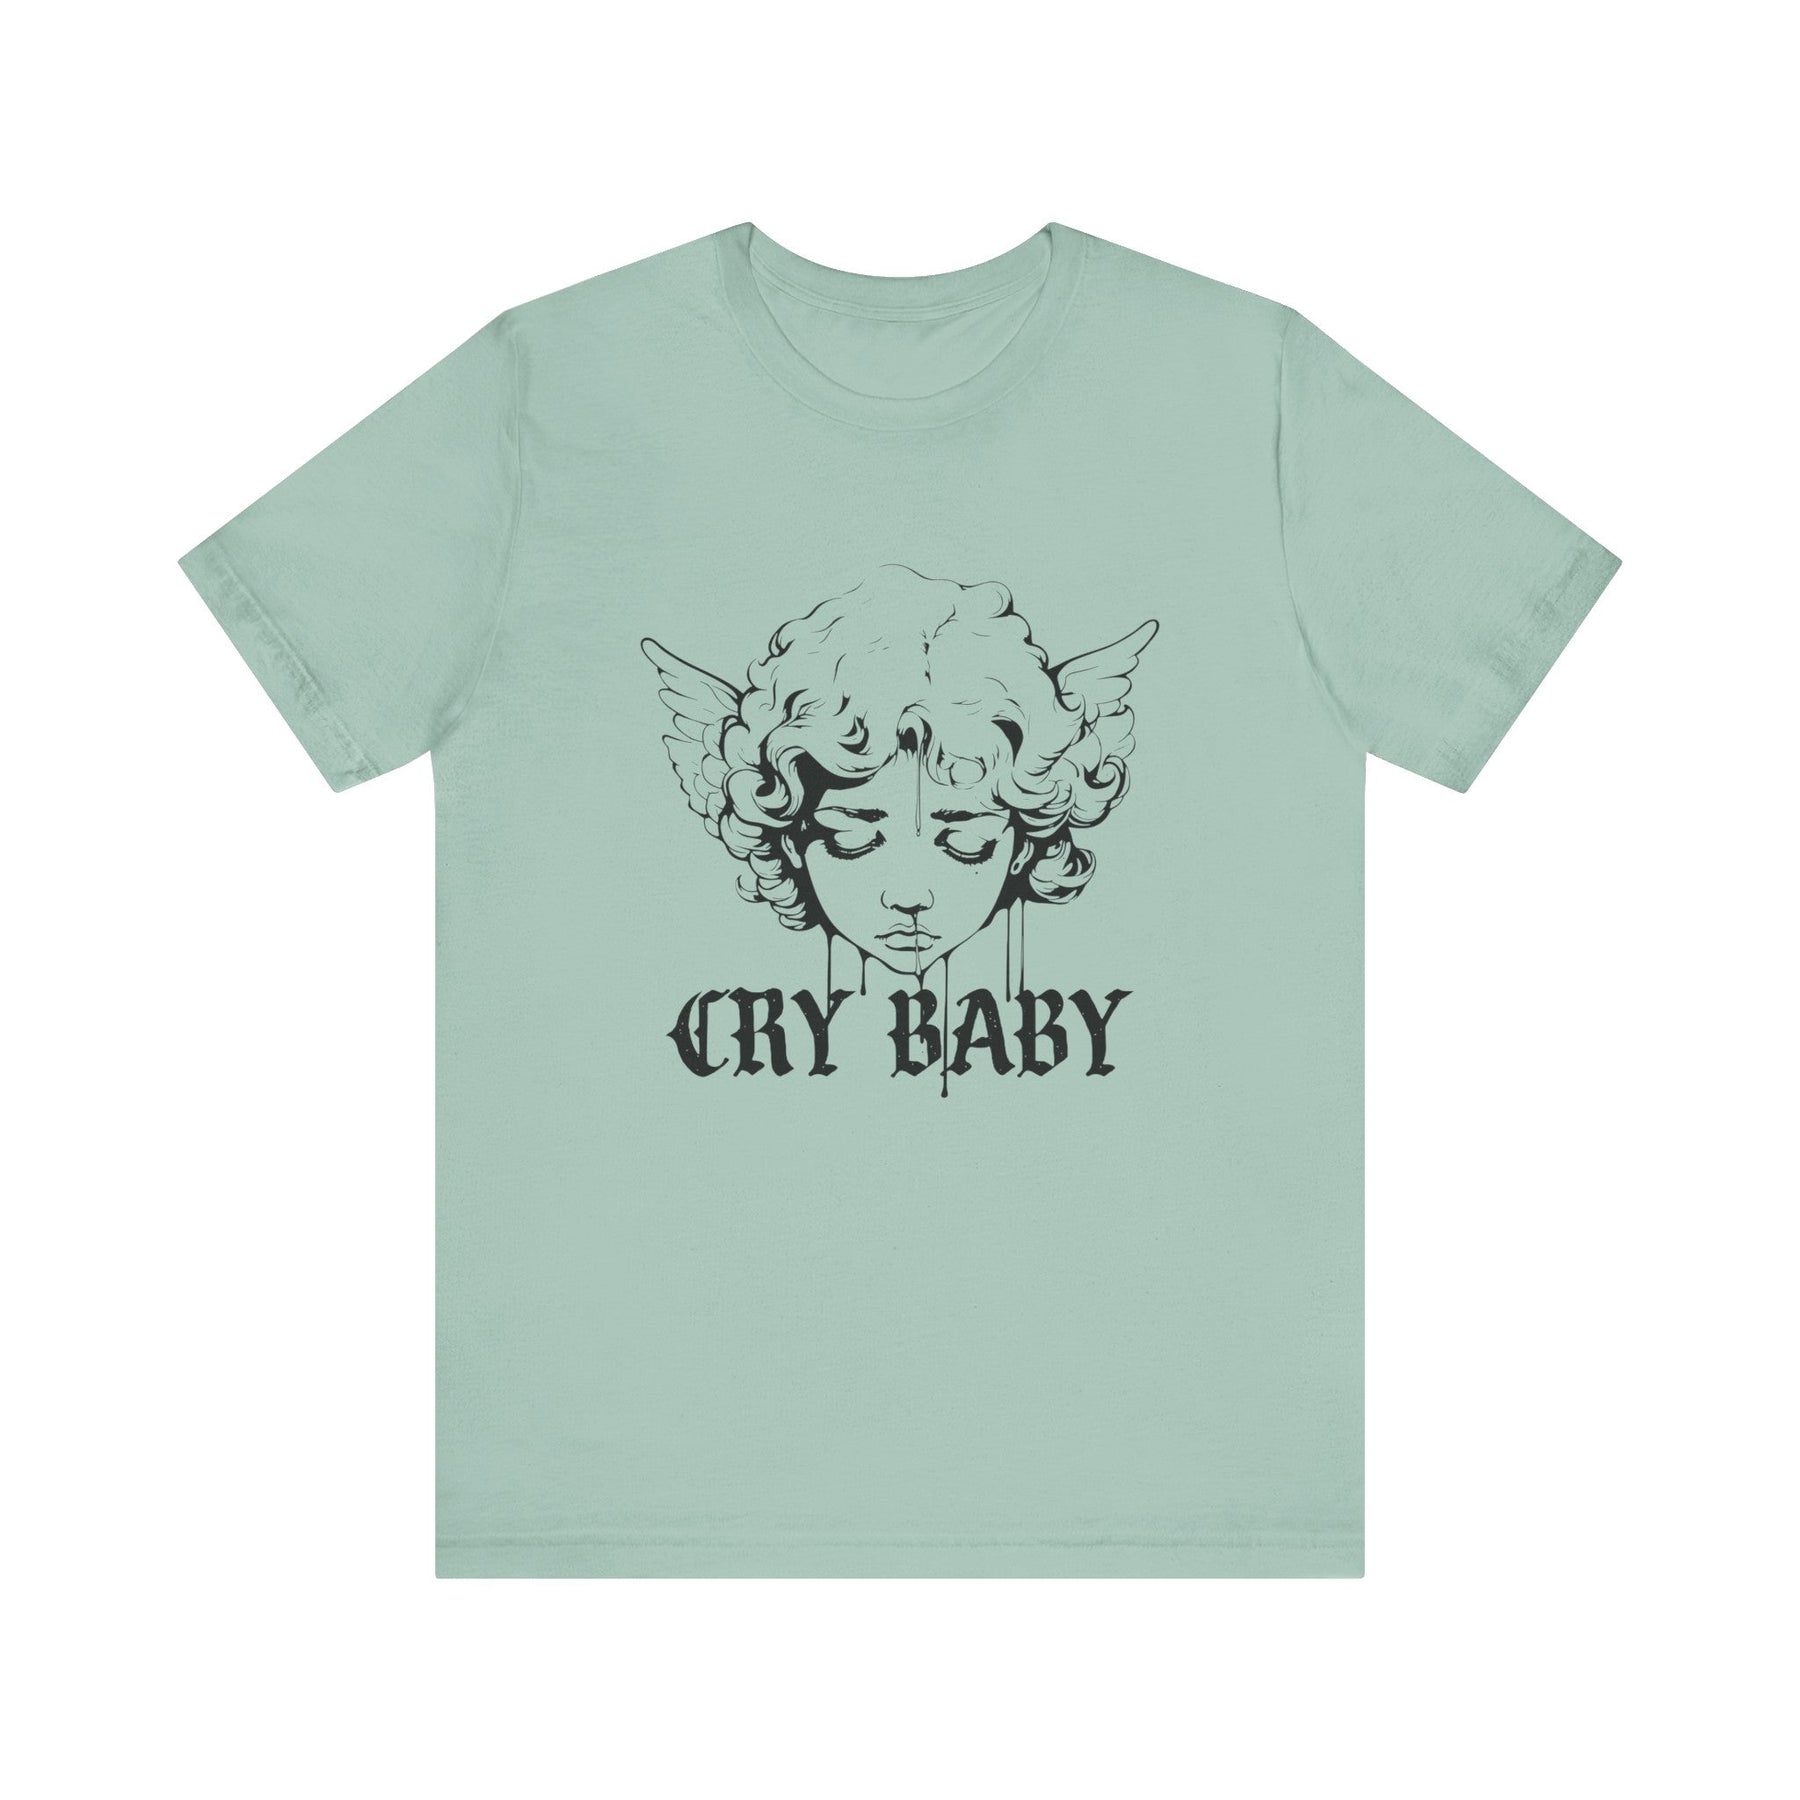 Crybaby Cherub T - Shirt - Goth Cloth Co.T - Shirt28652196092807804548